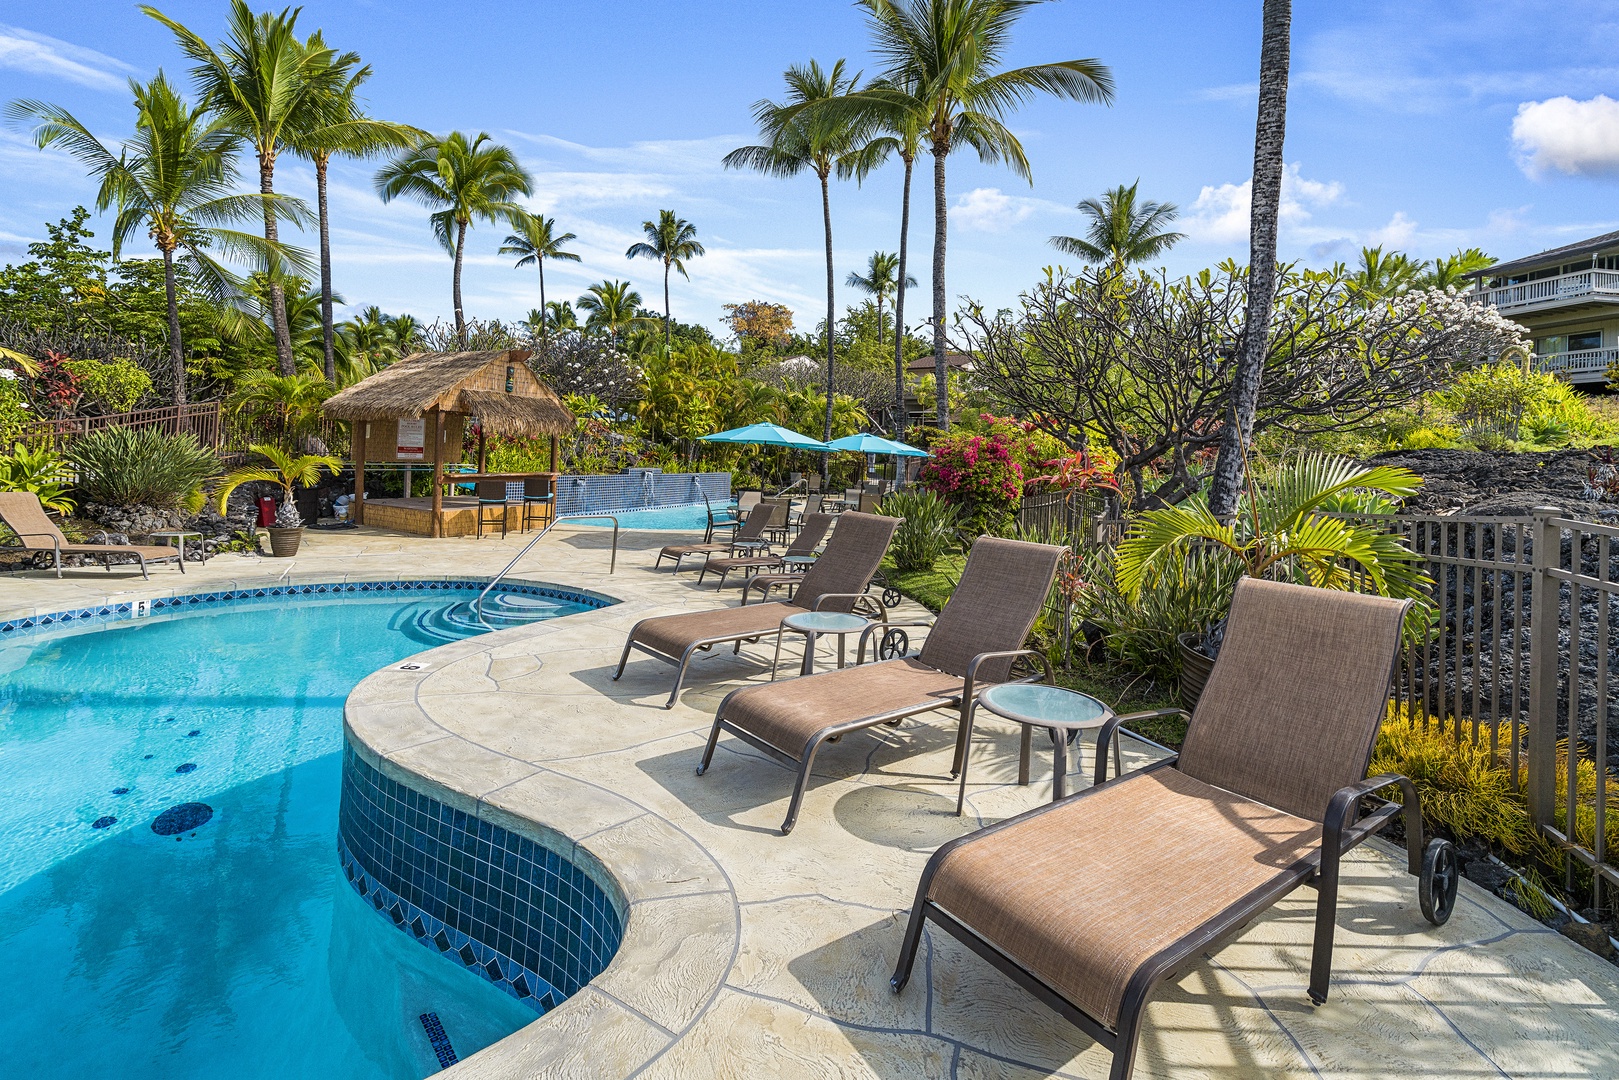 Kailua Kona Vacation Rentals, Keauhou Resort 104 - Lounge poolside under the Kona sun